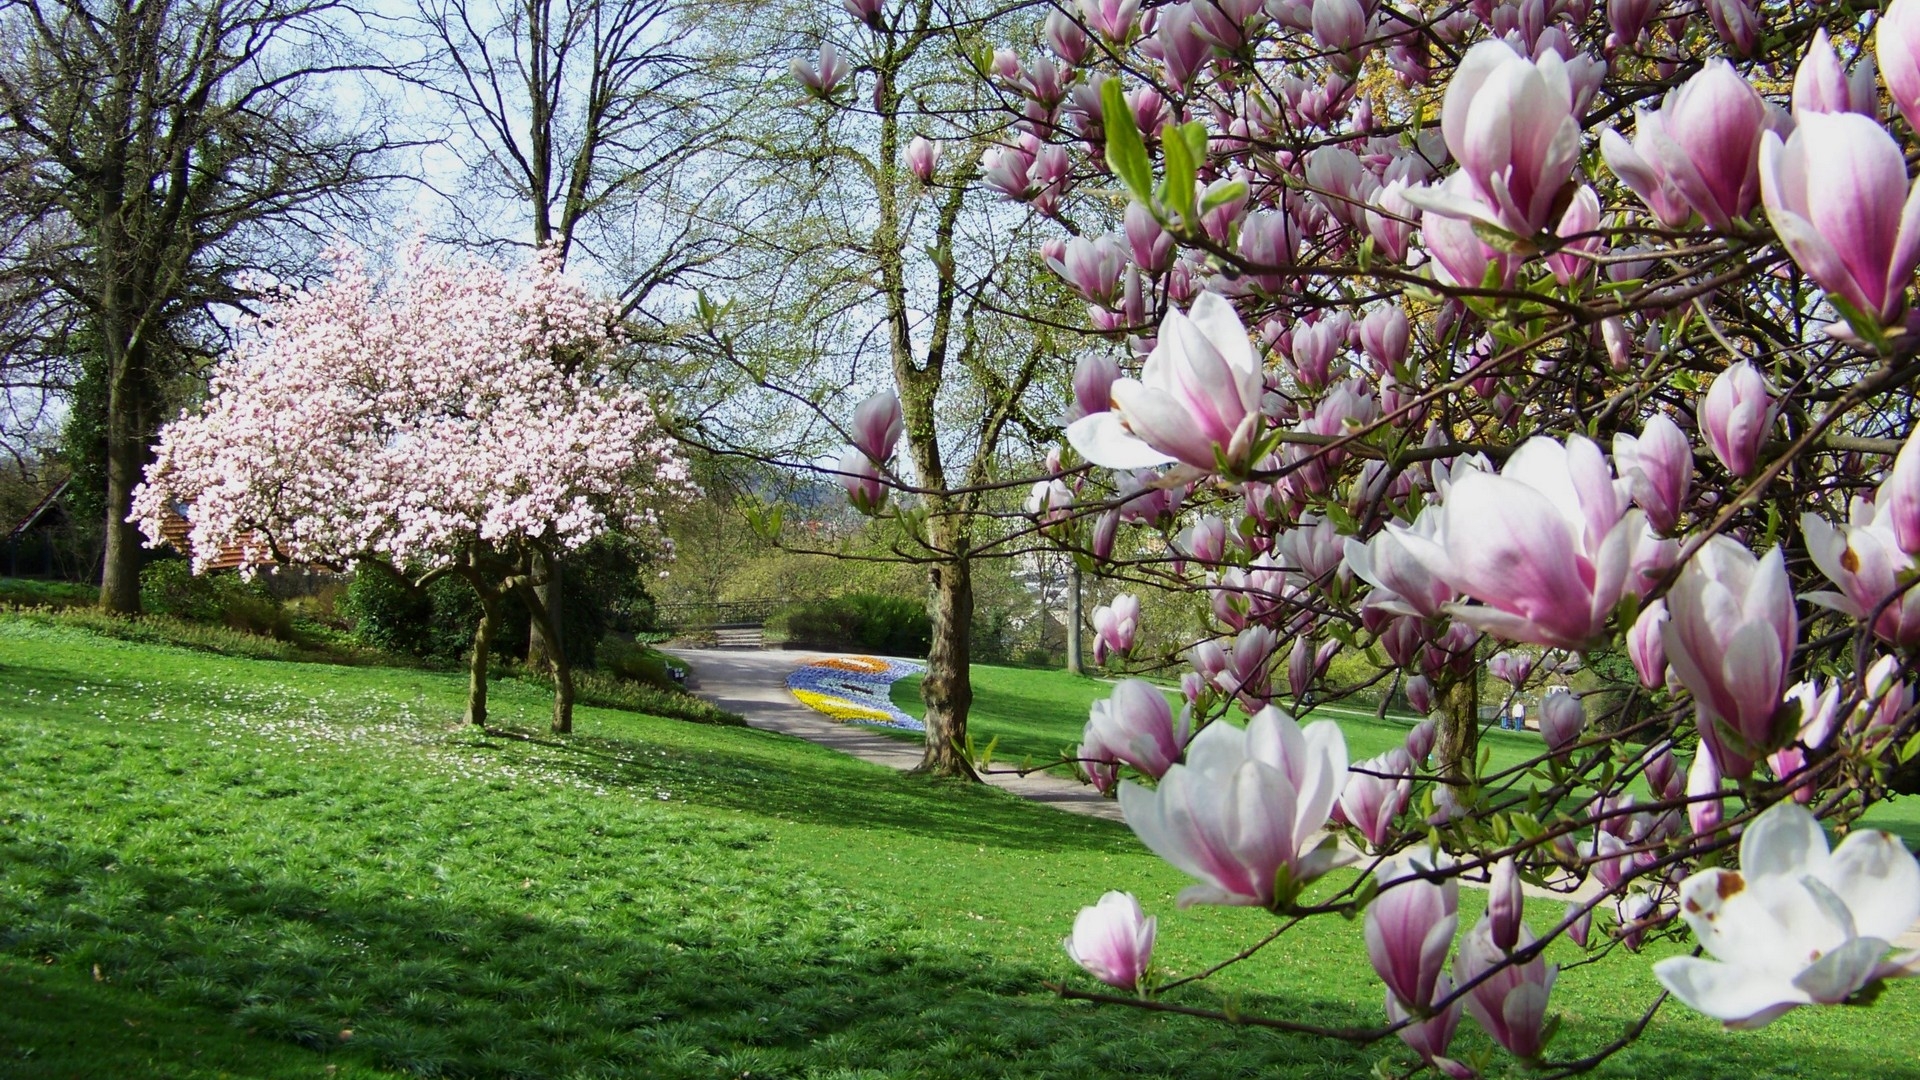 Flowering trees in the park